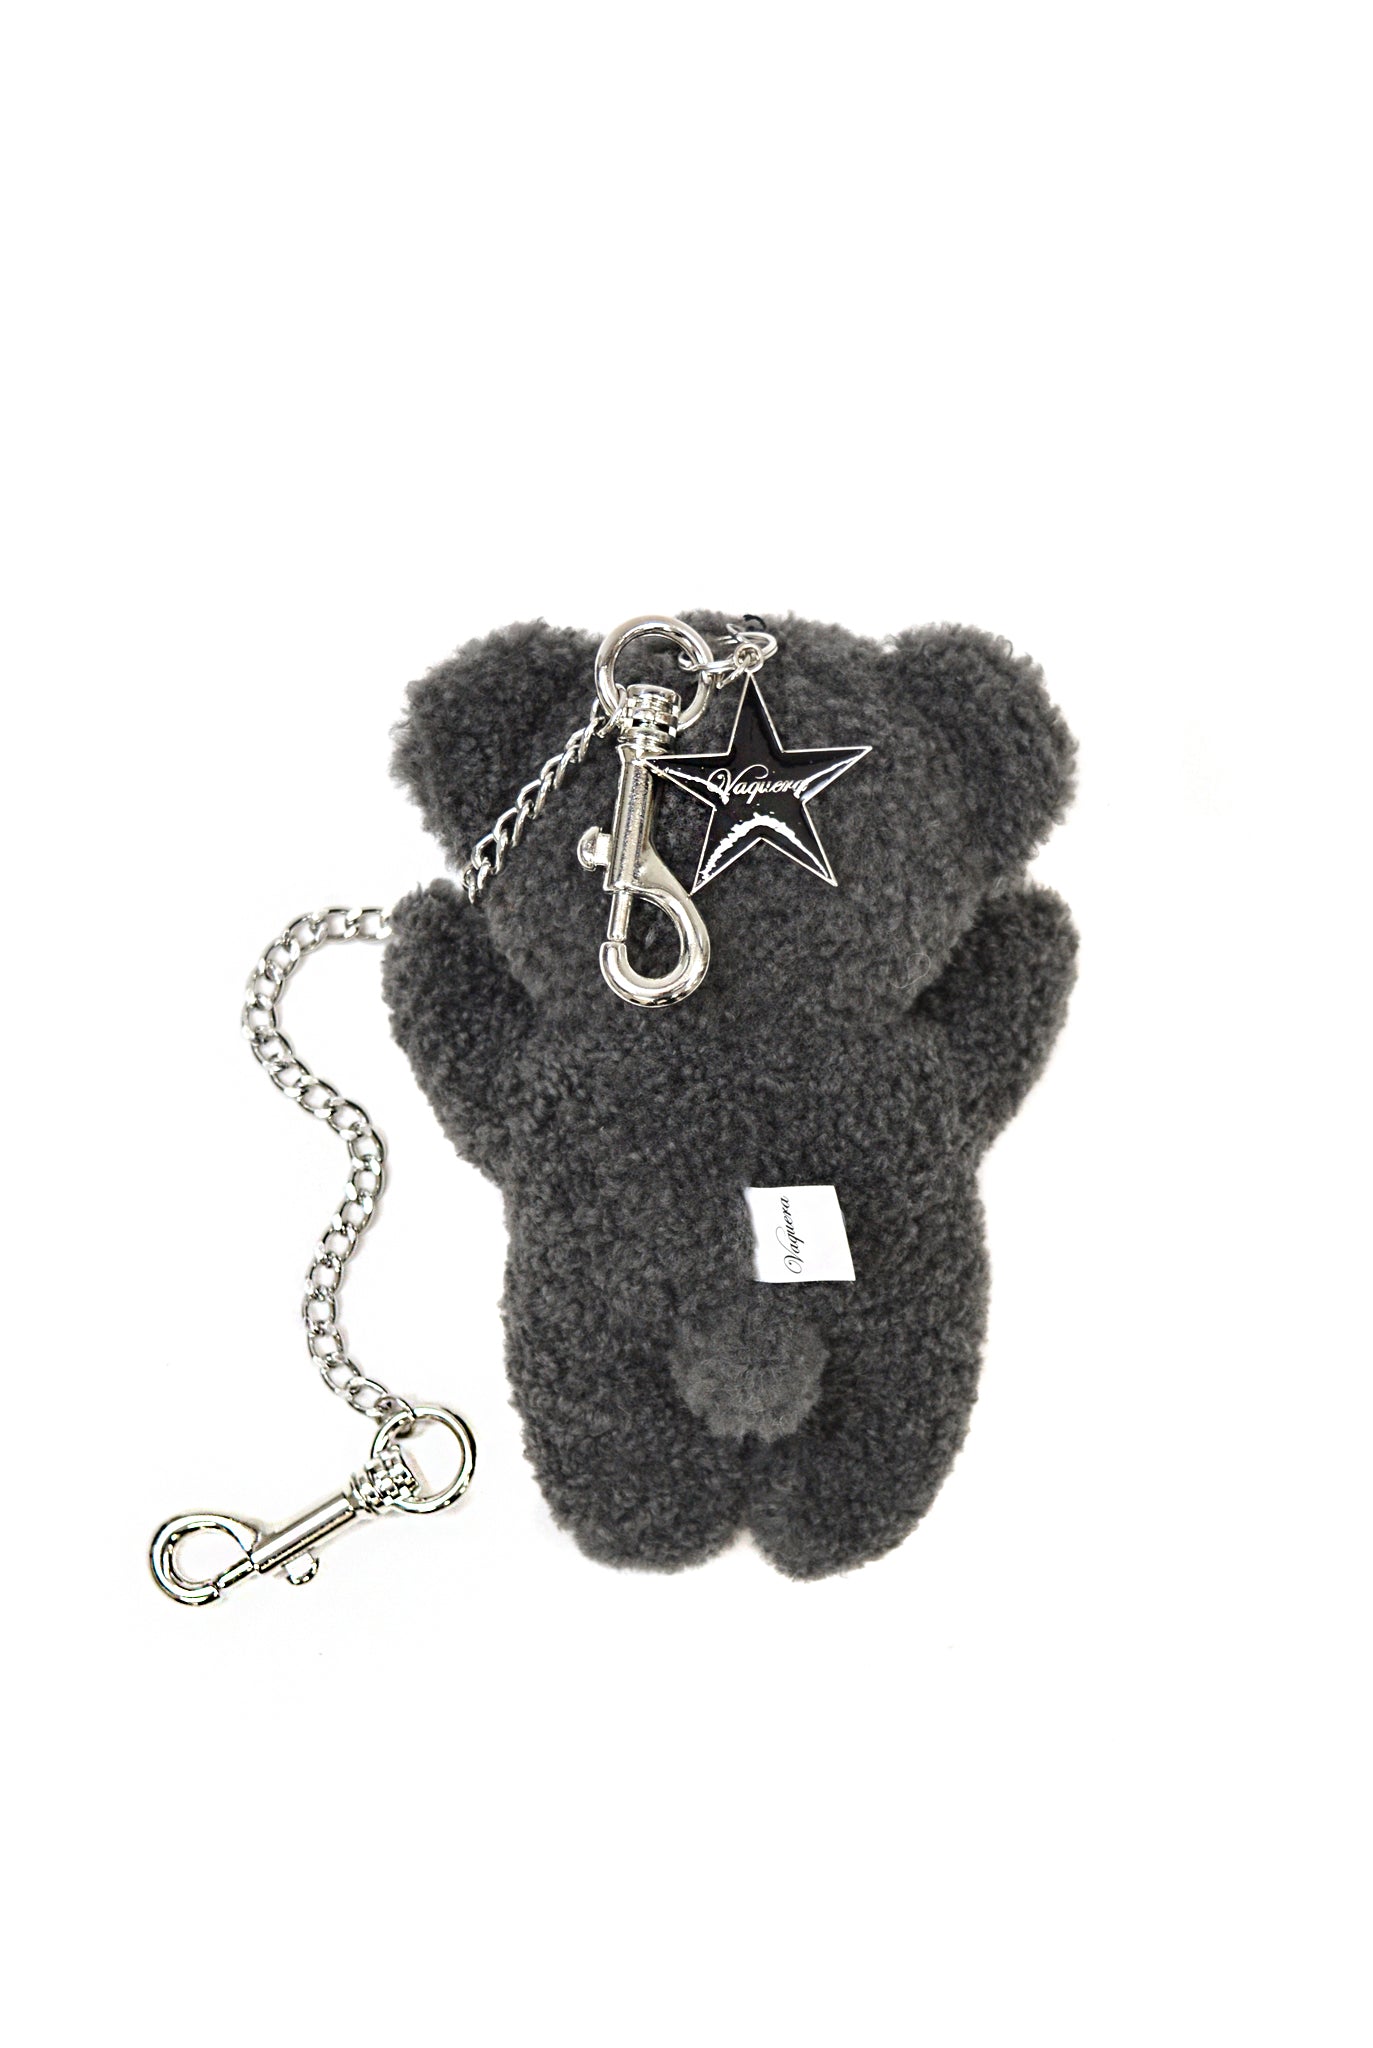 Vaquera Teddy Bear Key Chain, Leopard